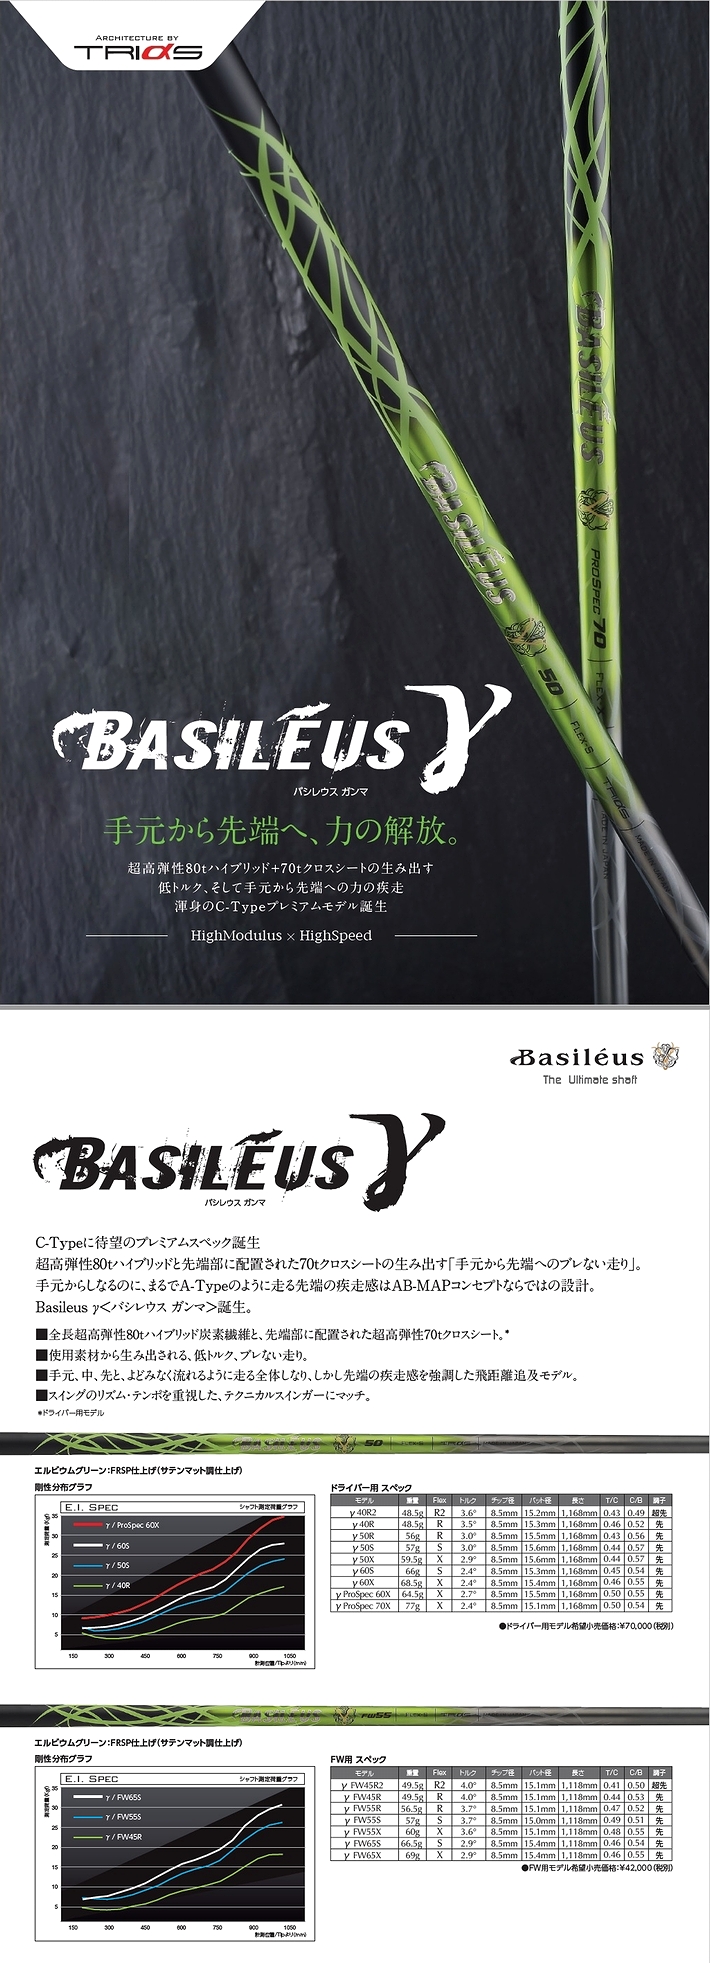 Basileus γ　ブログ　2